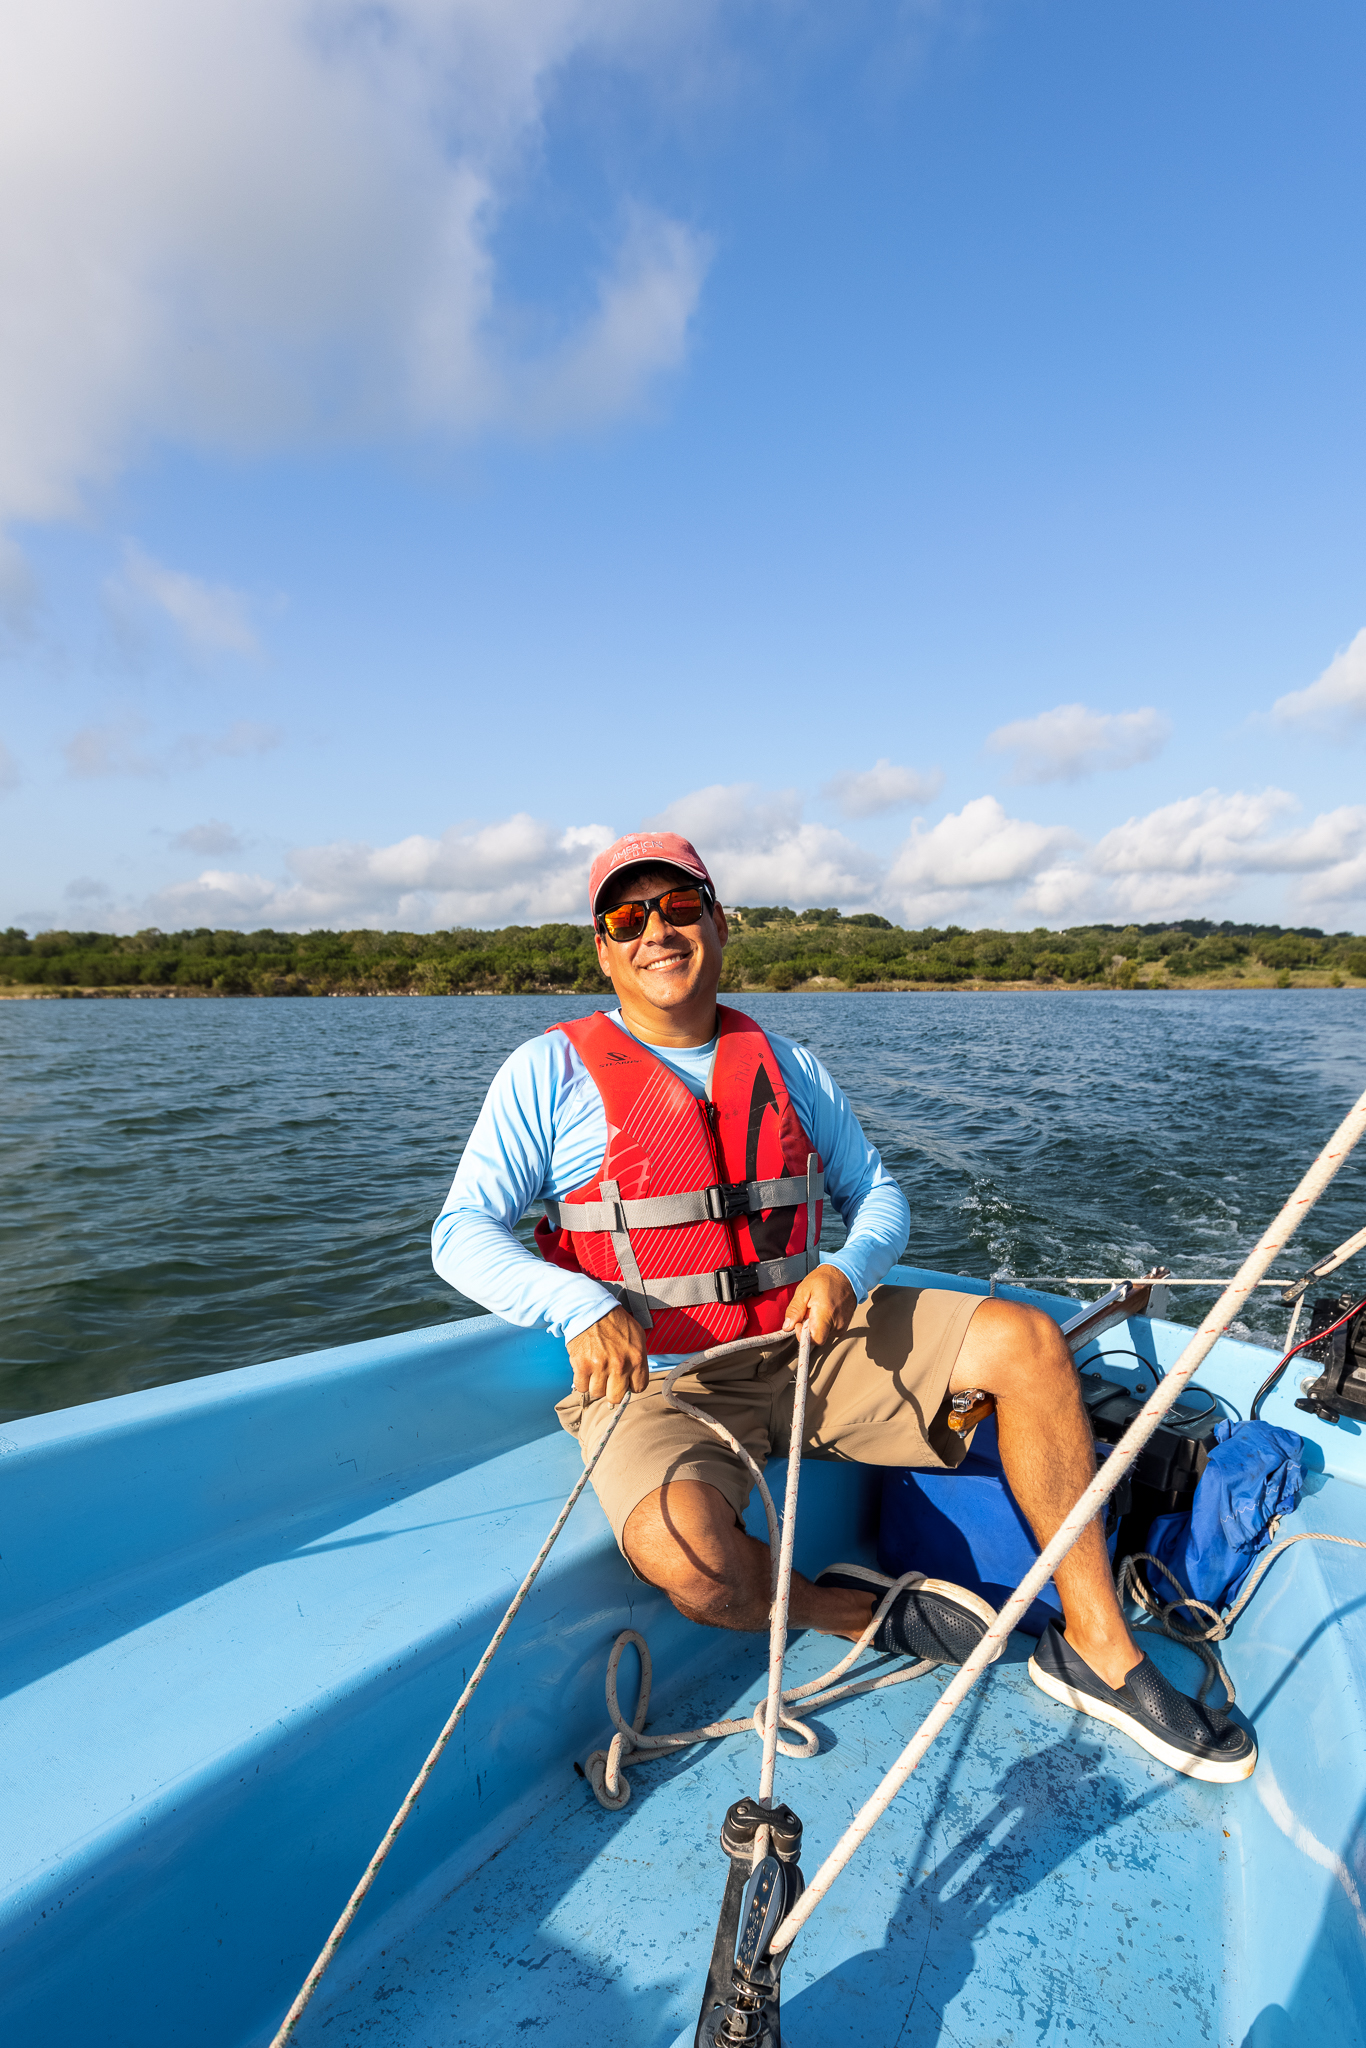 Captain Chapa of Trisum Sailing on a sailboat on Boerne Lake